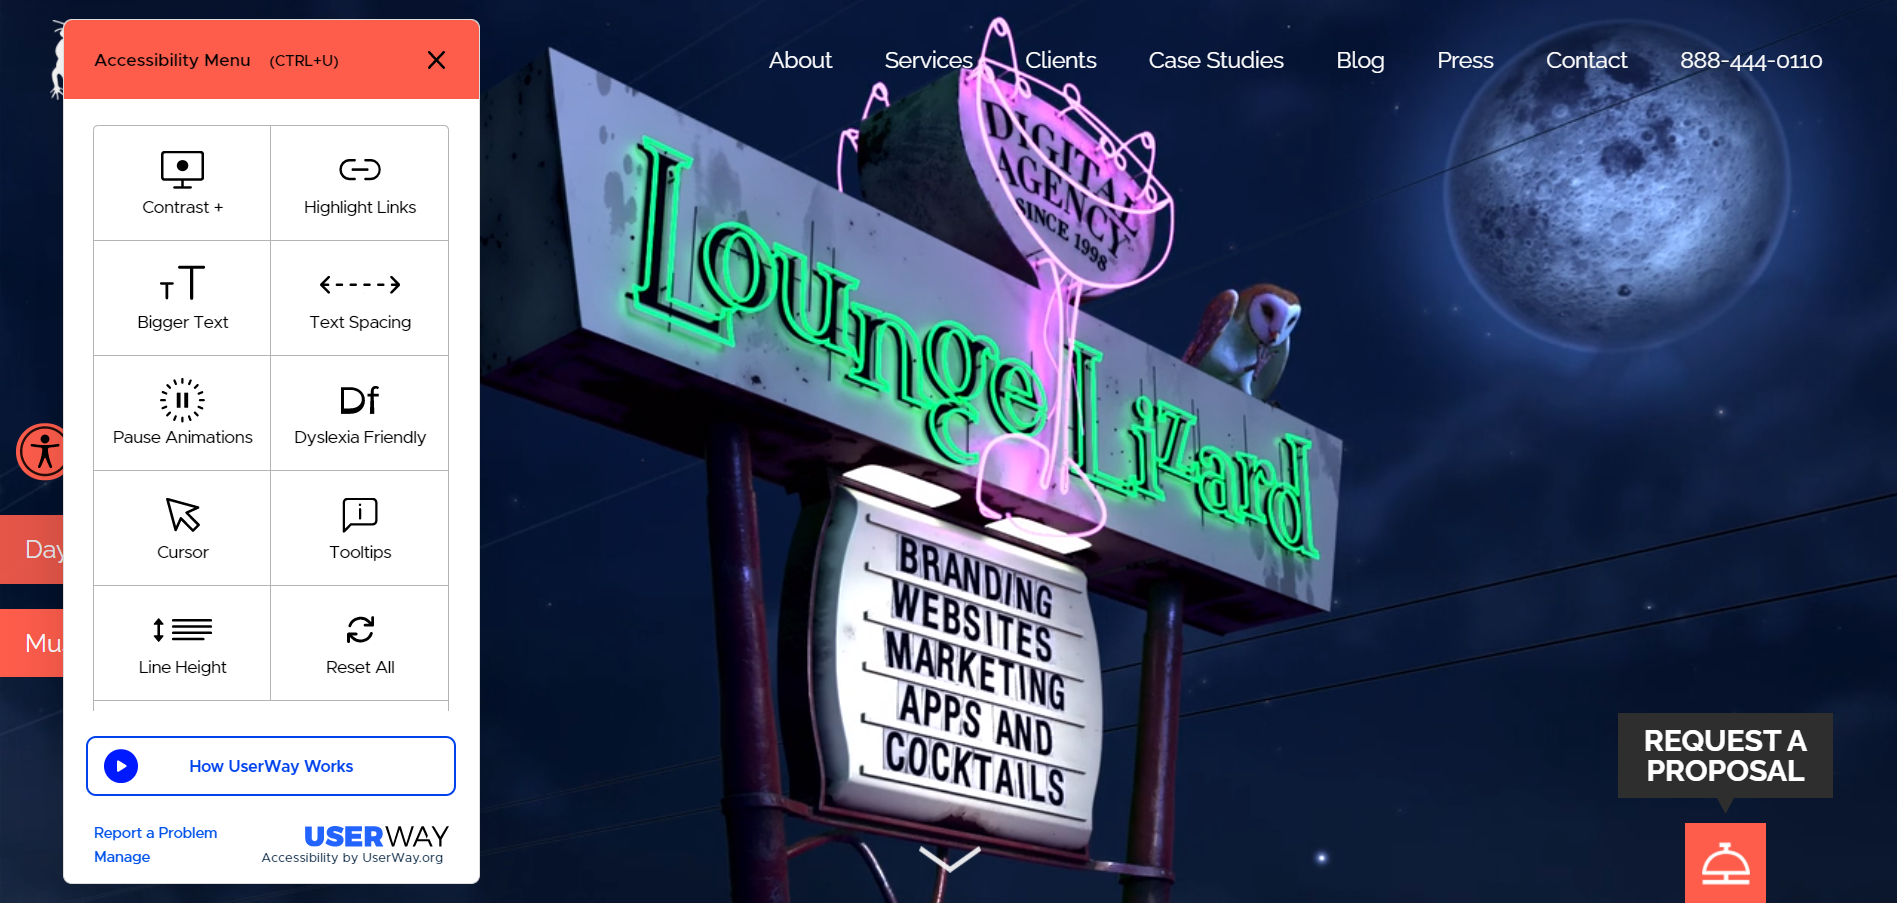 Lounge Lizard's website